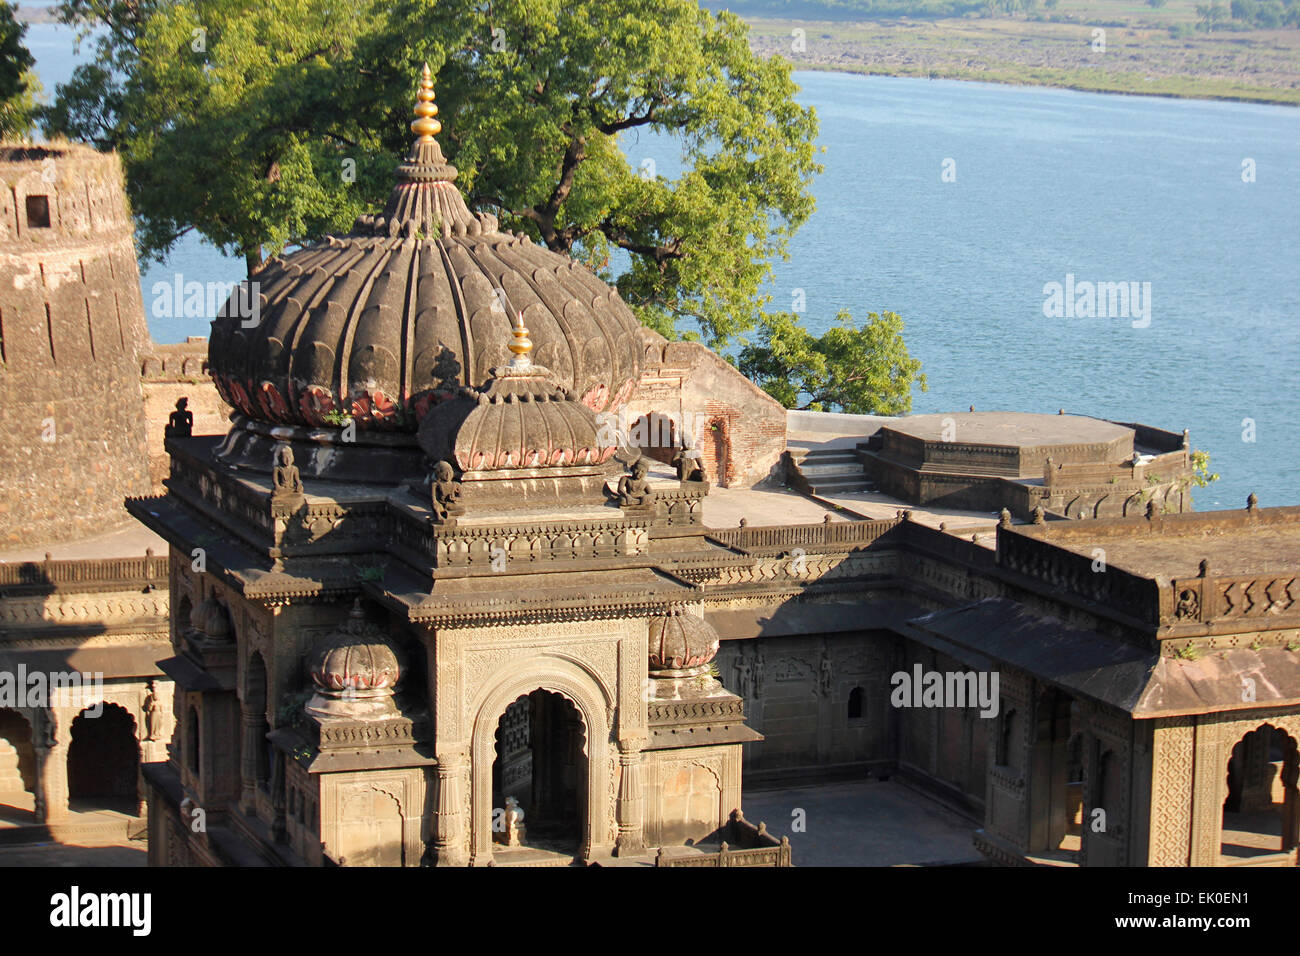 Top view of Shiva temple in Ahilyabai Holkar fort, Maheswar, Khargone, Madhya Pradesh, India Stock Photo